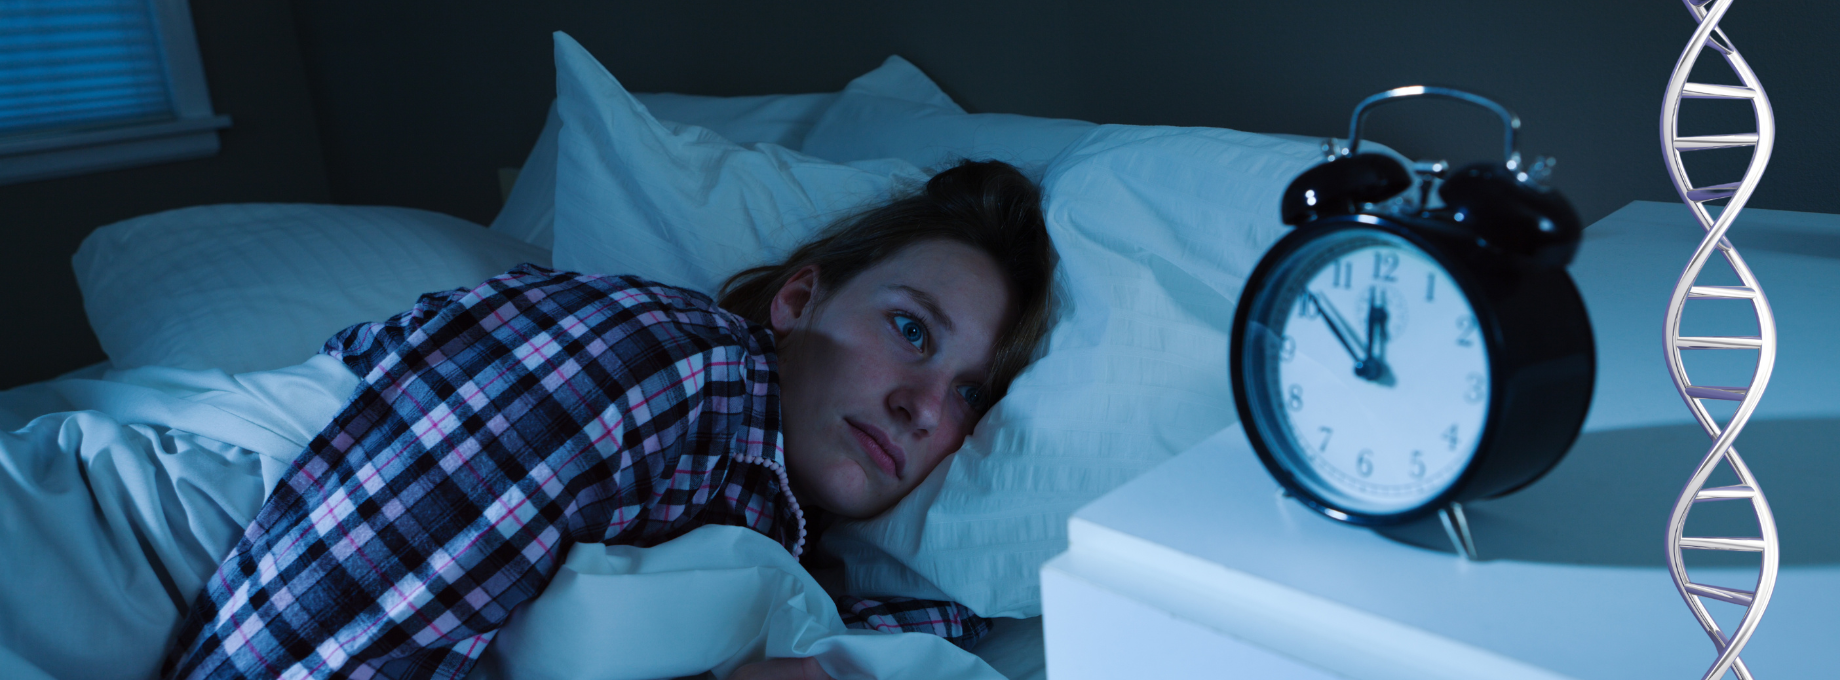 Woman struggling to sleep, looking at alarm clock